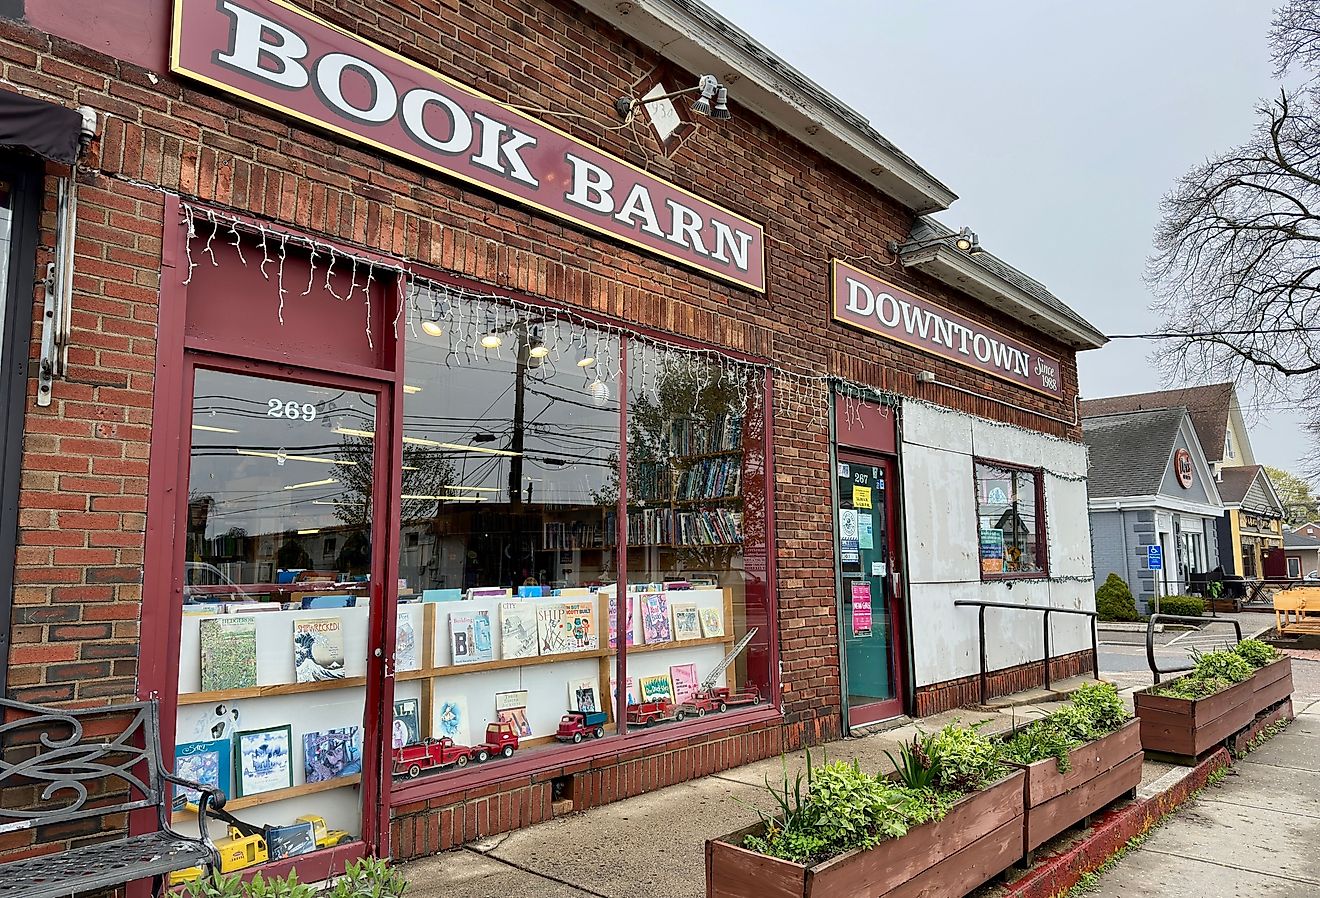 Exterior of the Book Barn shop in Niantic, Connecticut. Image credit Rachel Rose Boucher via Shutterstock.